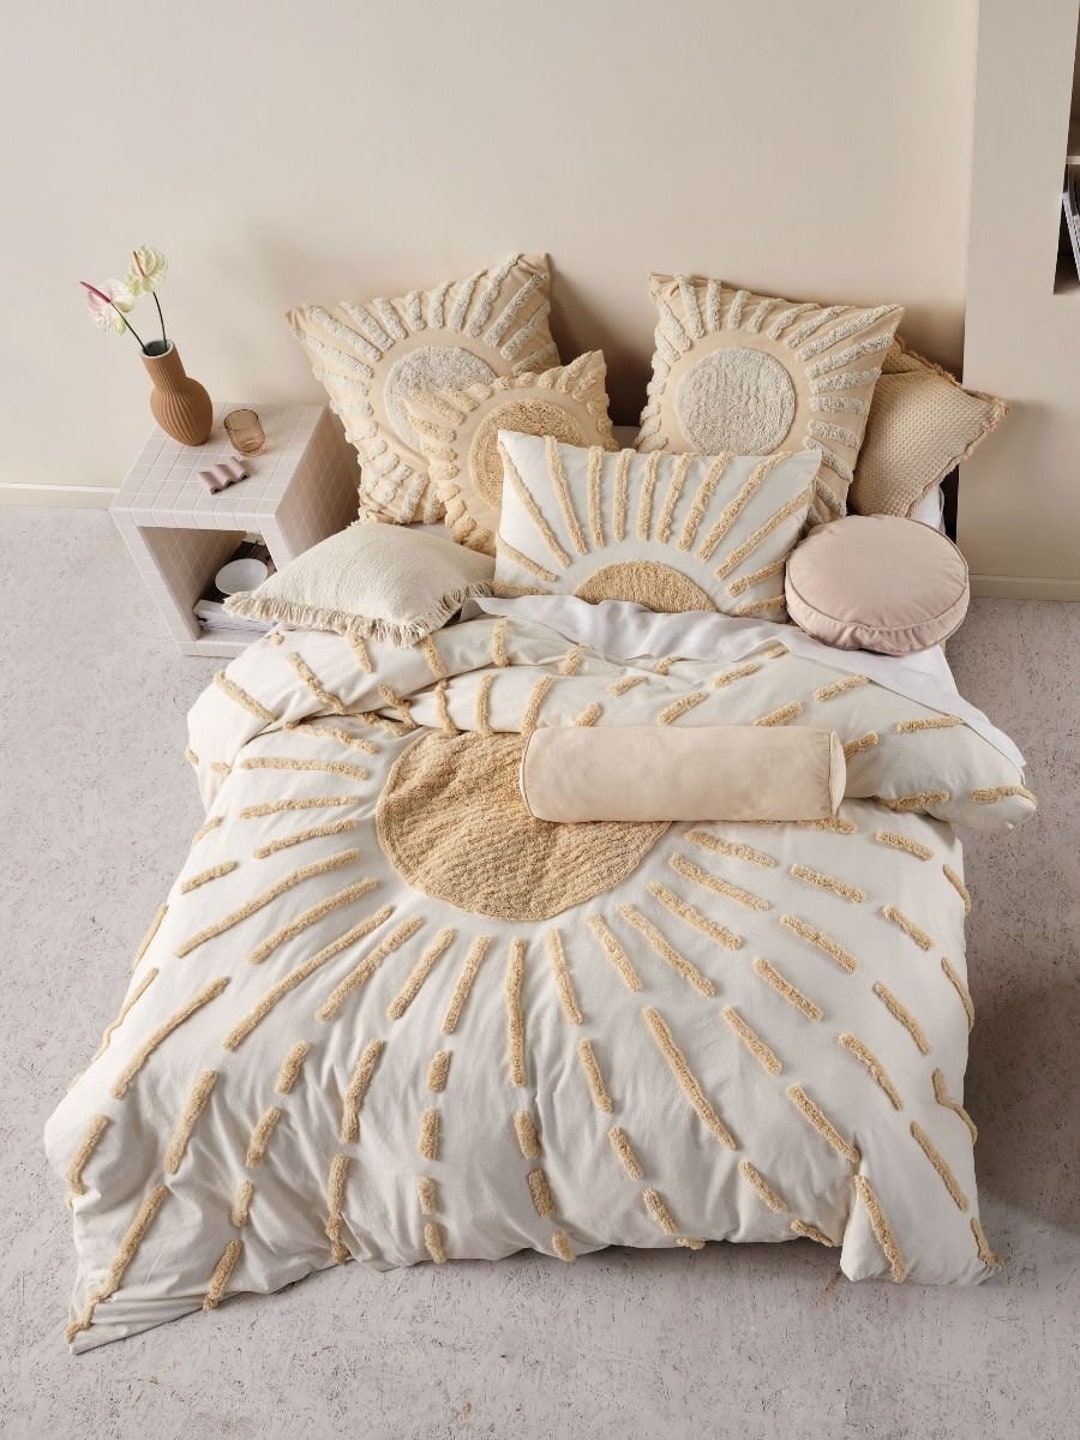 Ropa De Cama Stitch Bedding Sets Home Textile Duvet Cover Single